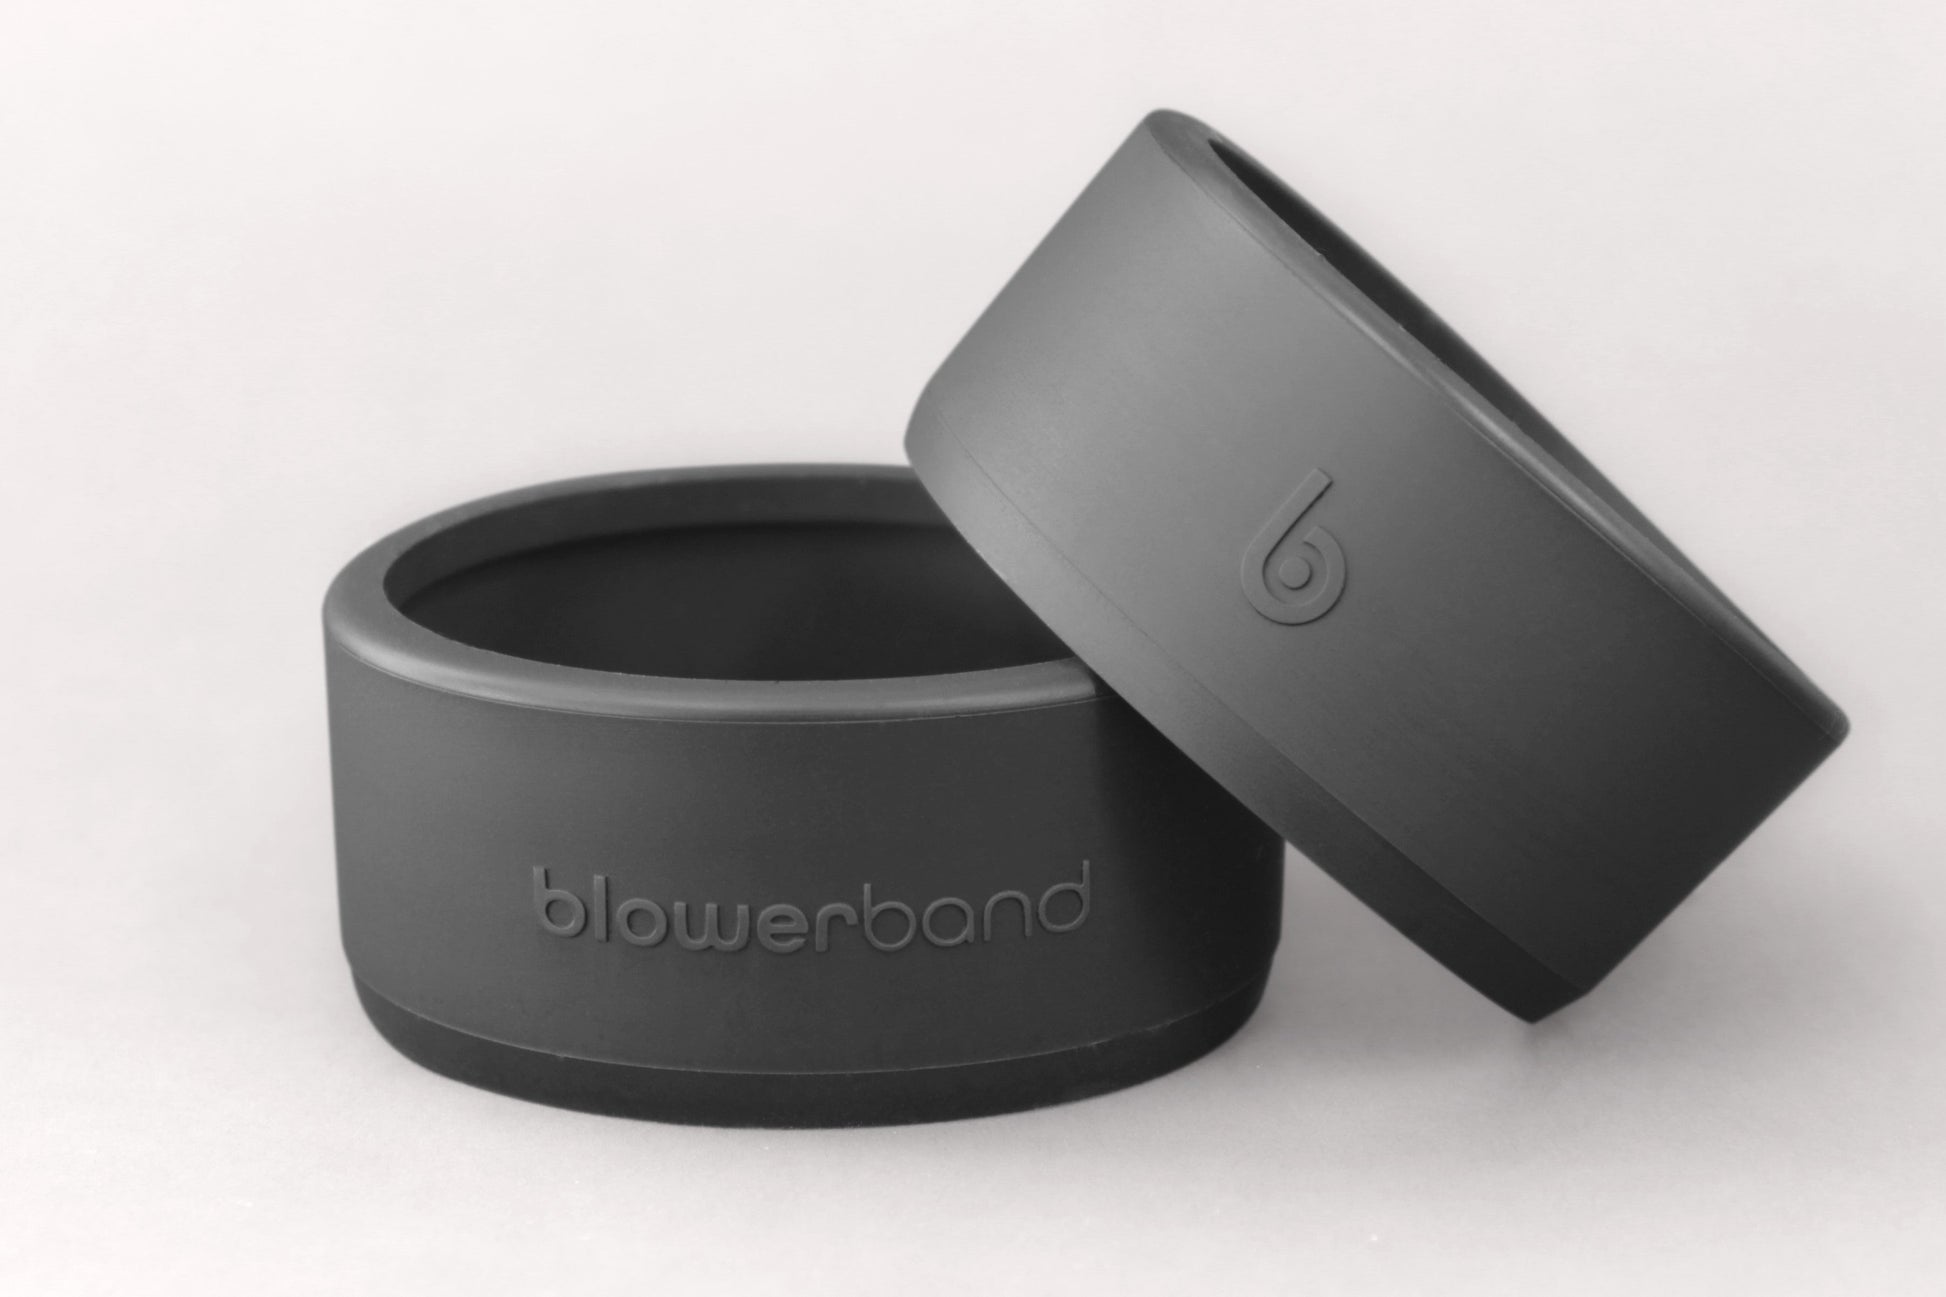 Blowerband - Black - BLOWERBAND